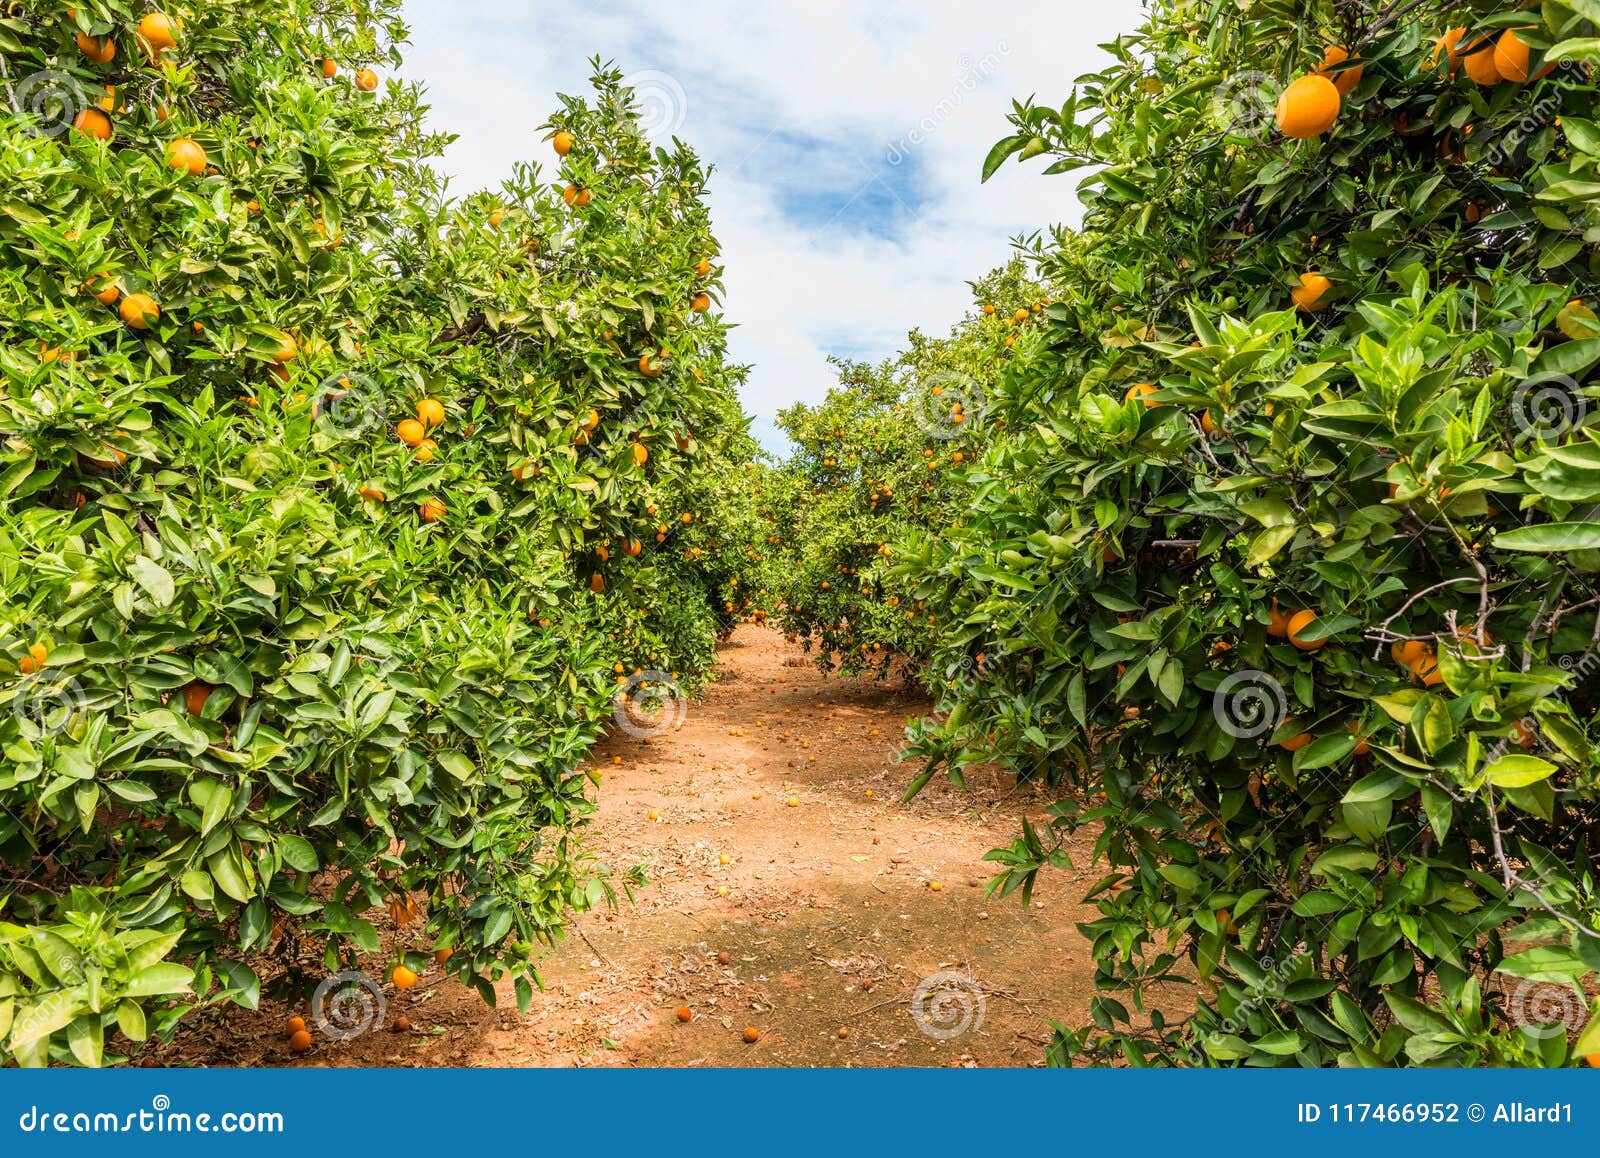 orange orchard in alzira spain